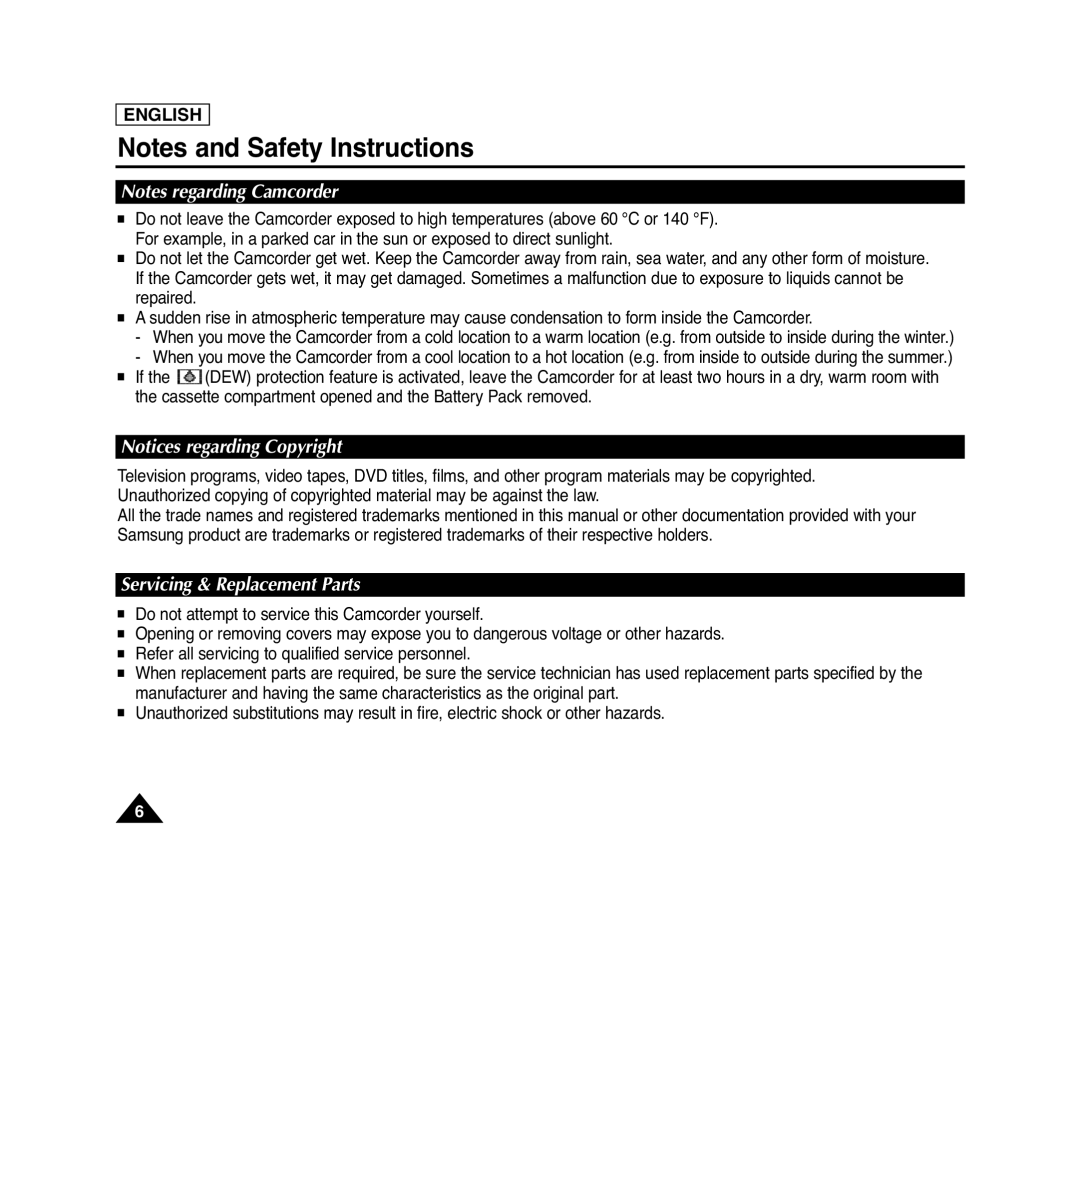 Samsung SC-D364, SC-D263 Notes regarding Camcorder, Notices regarding Copyright, Servicing & Replacement Parts, English 